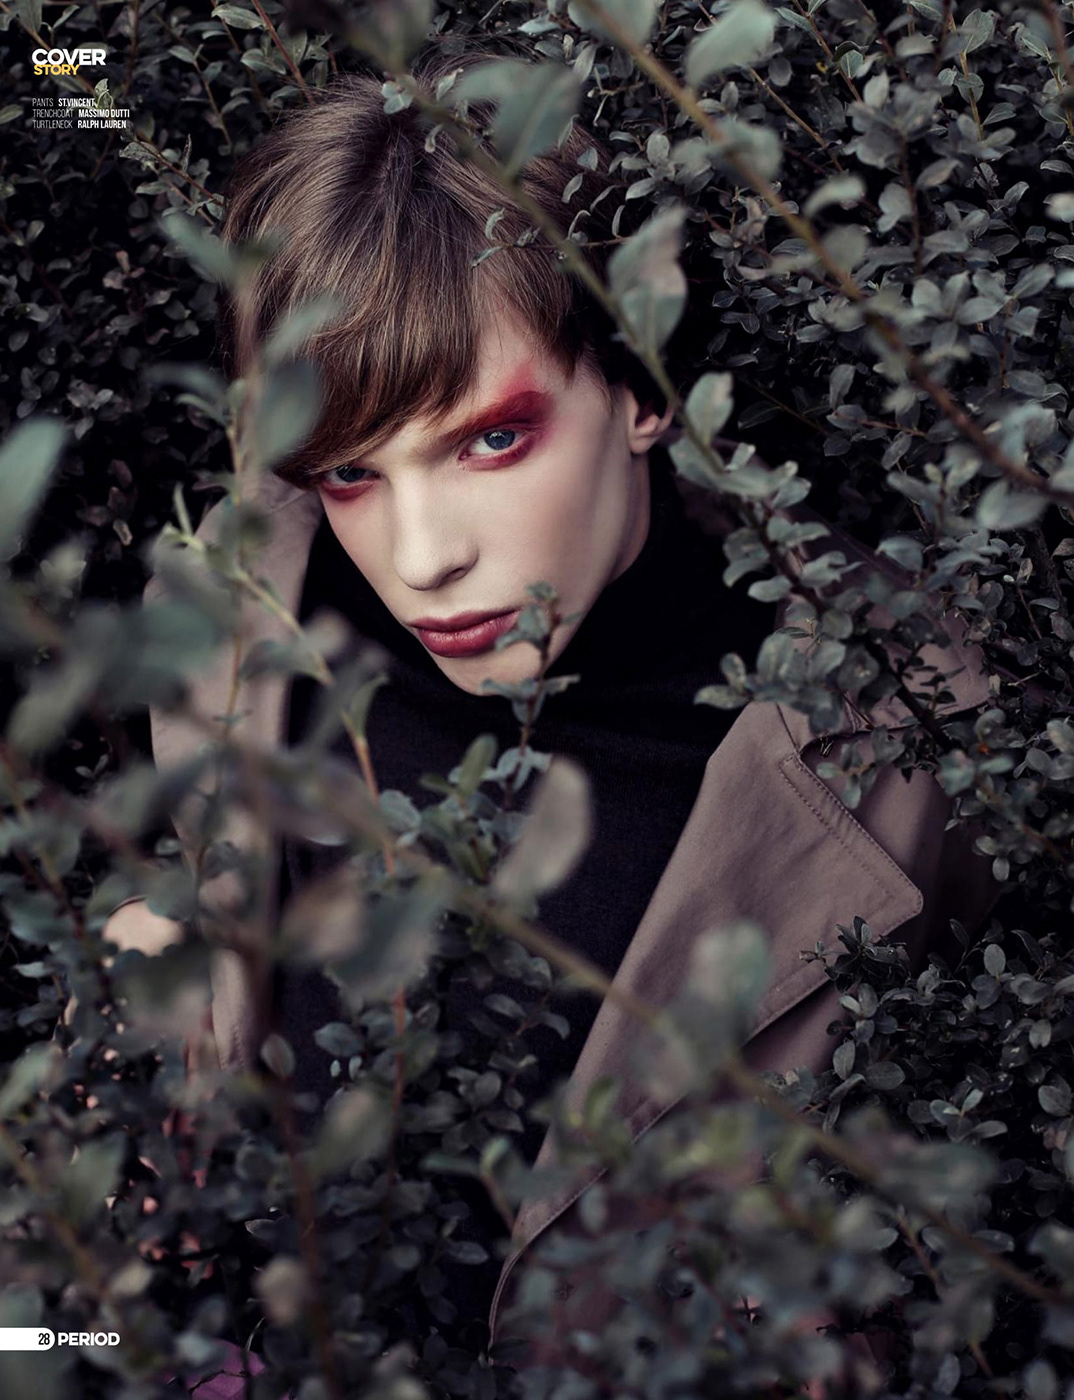 editorial Fashion  Botanical garden garden Nature Make Up boy male model period magazine